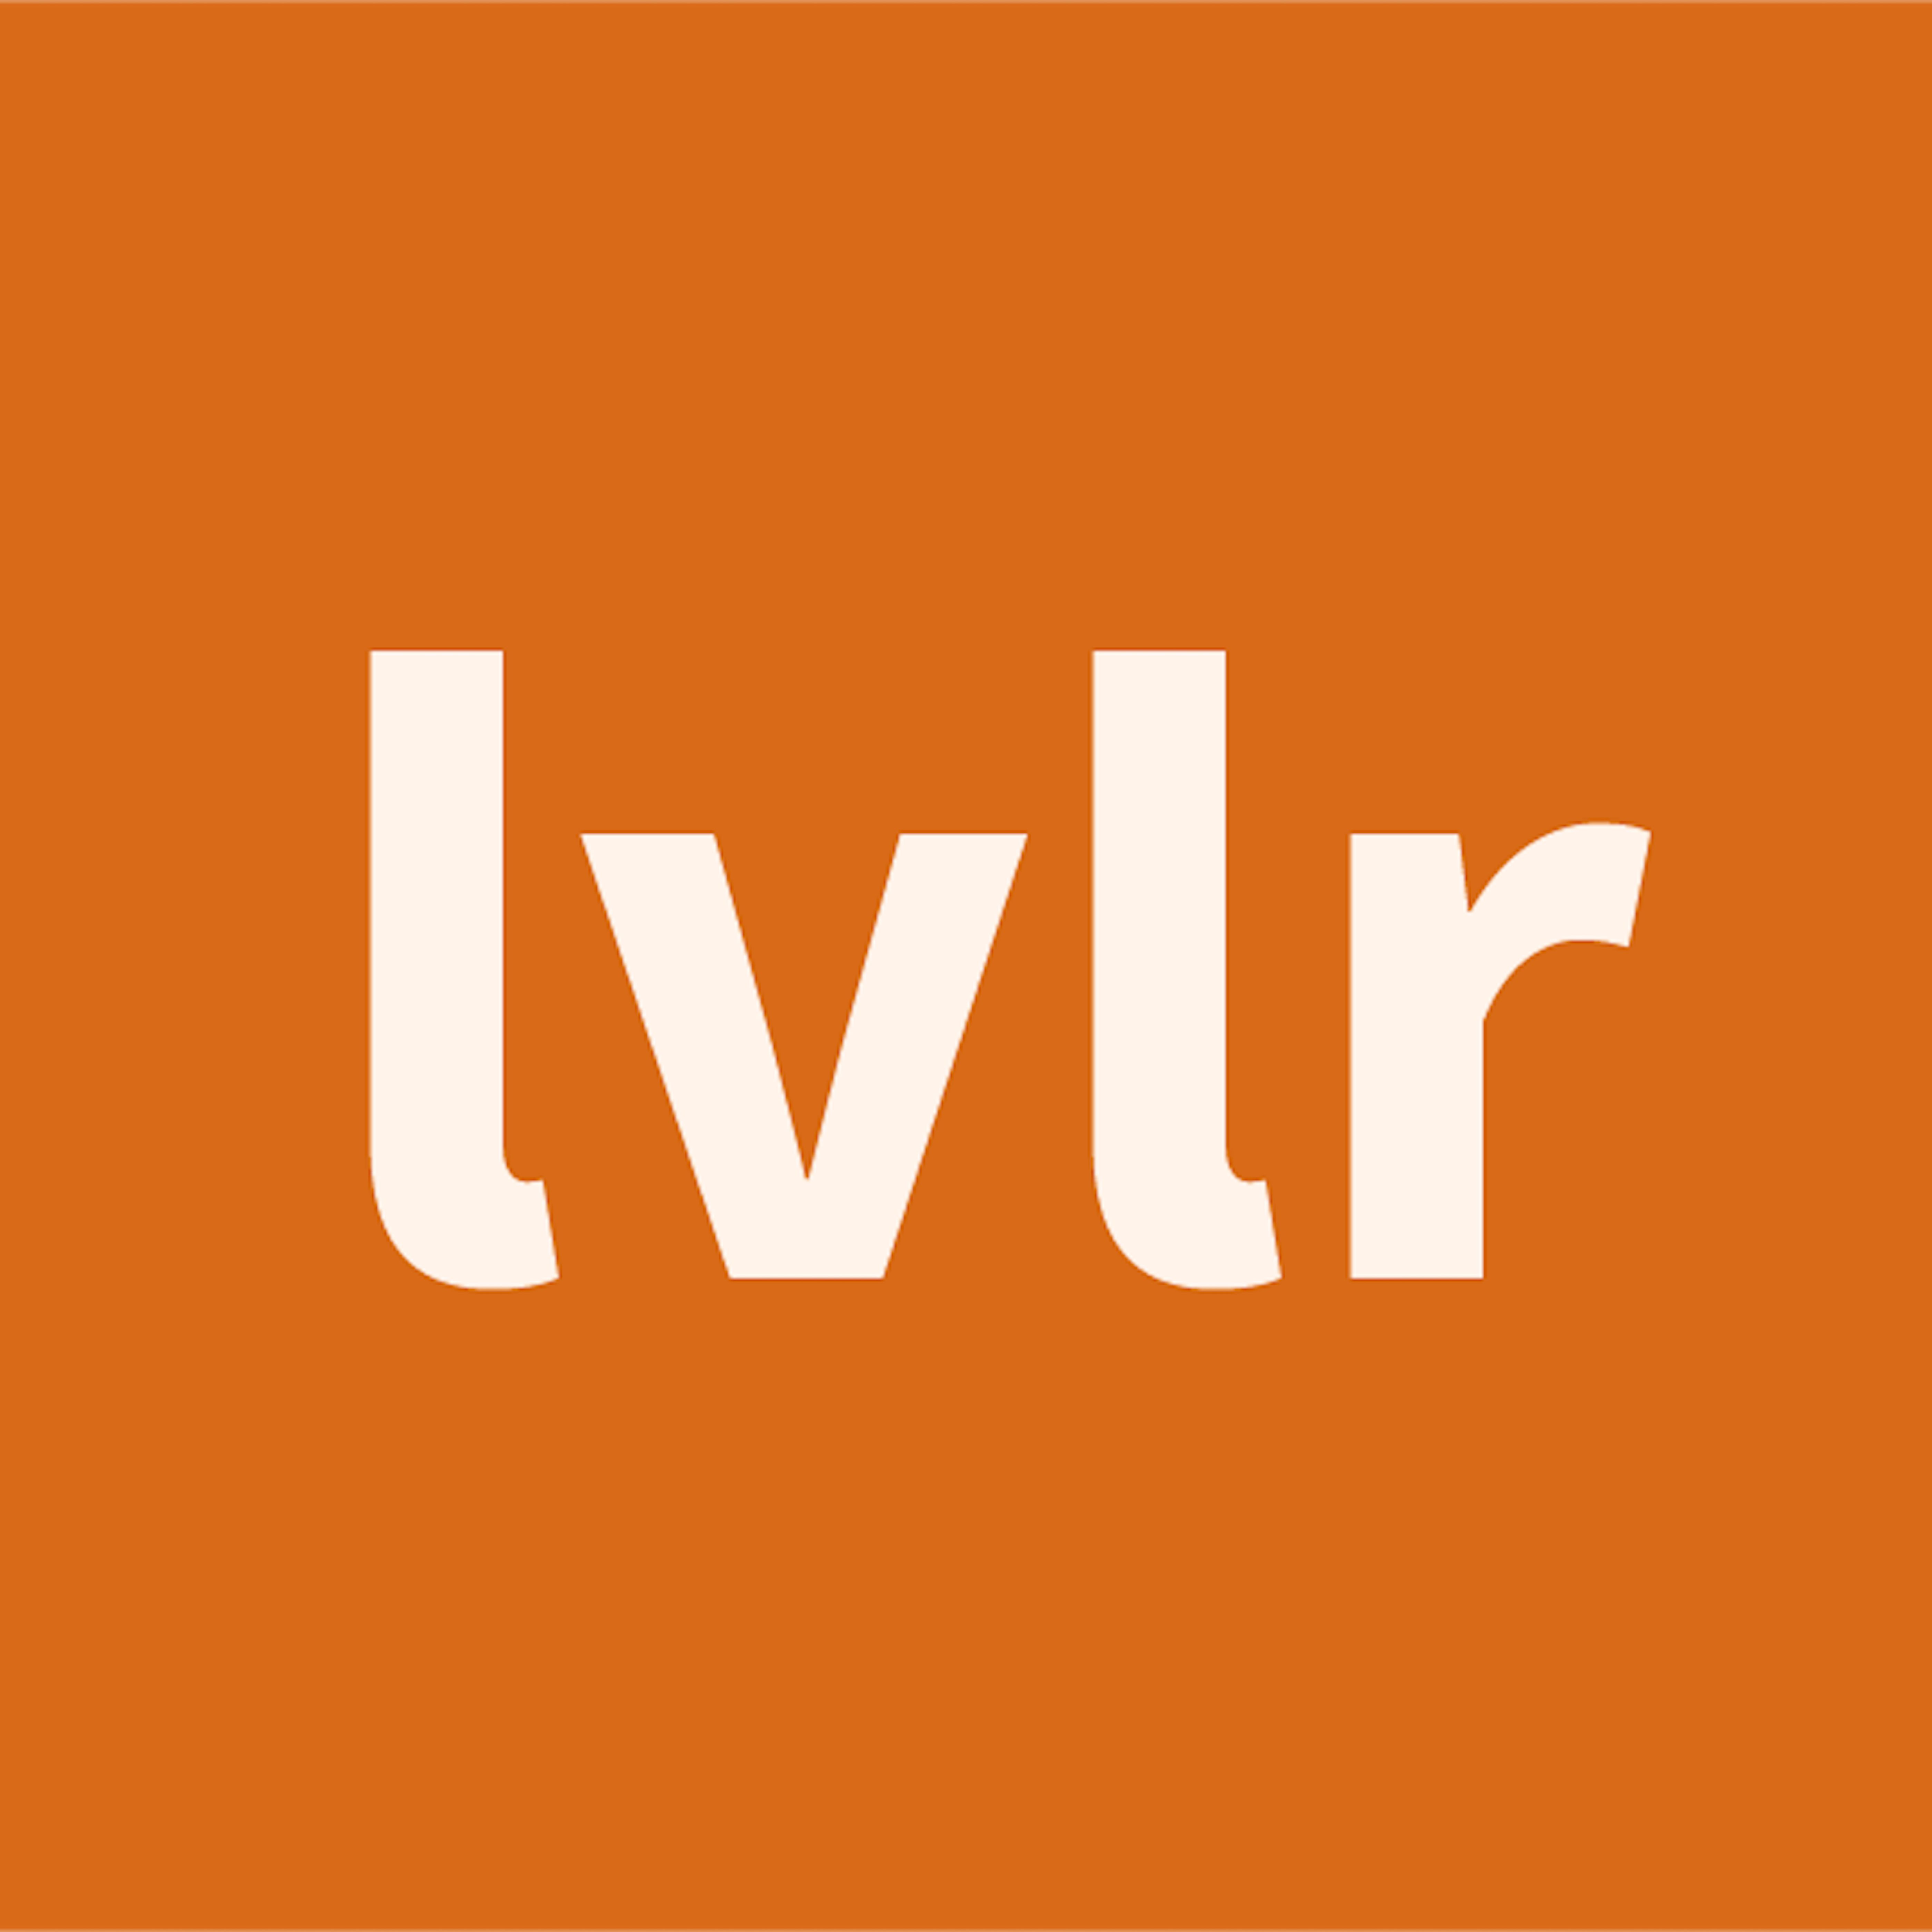 LVLR Podcast